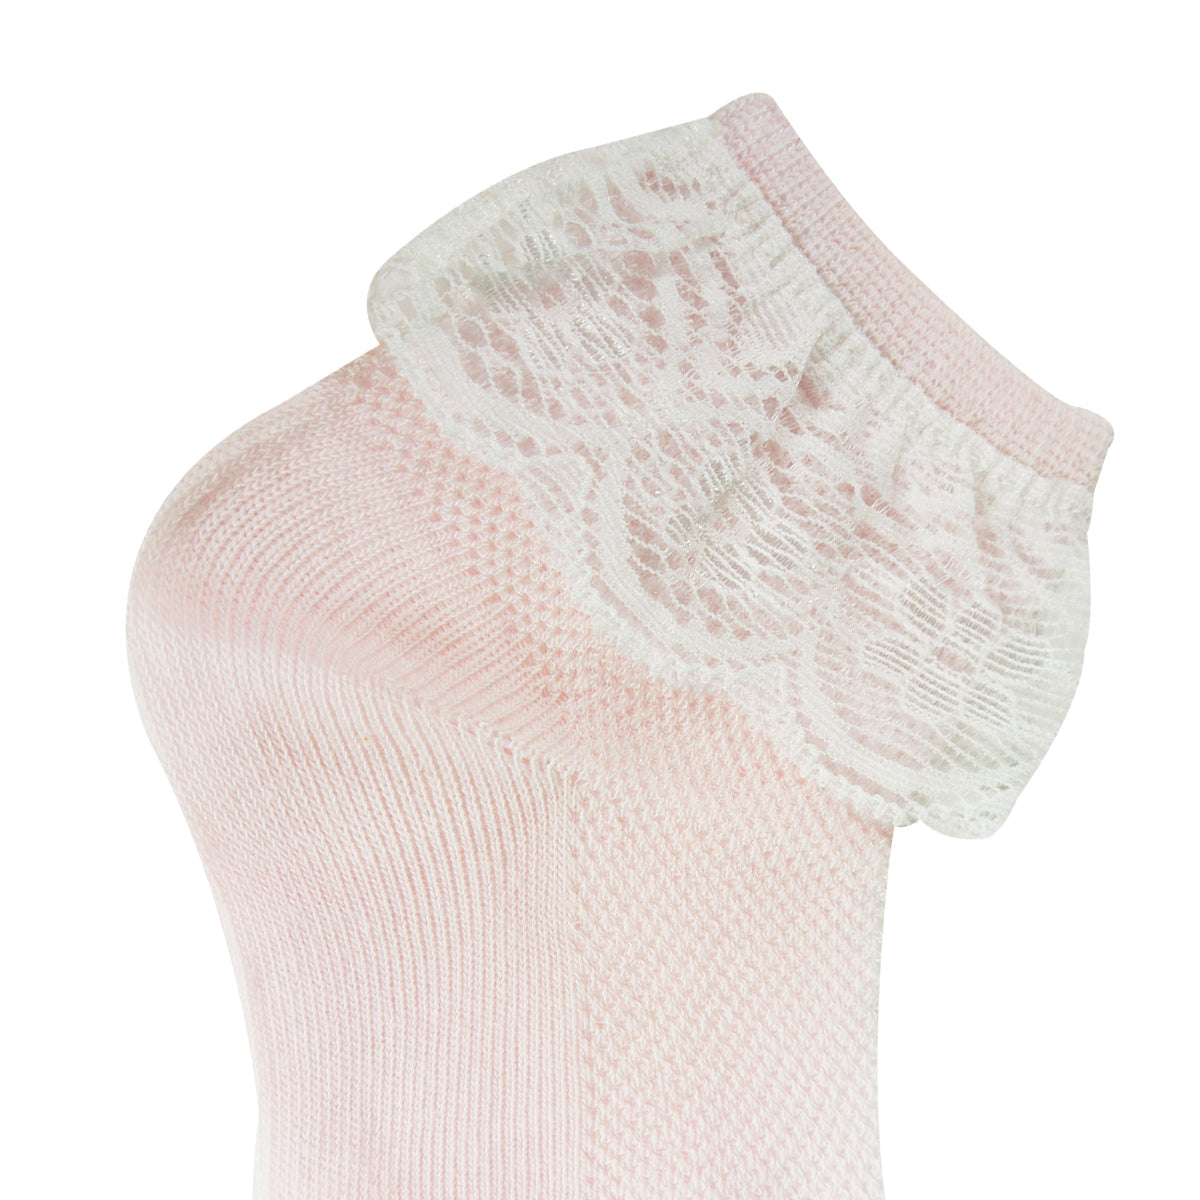 Toddler Girl Cotton Mesh Lace Cuff Socks (Set of 3)